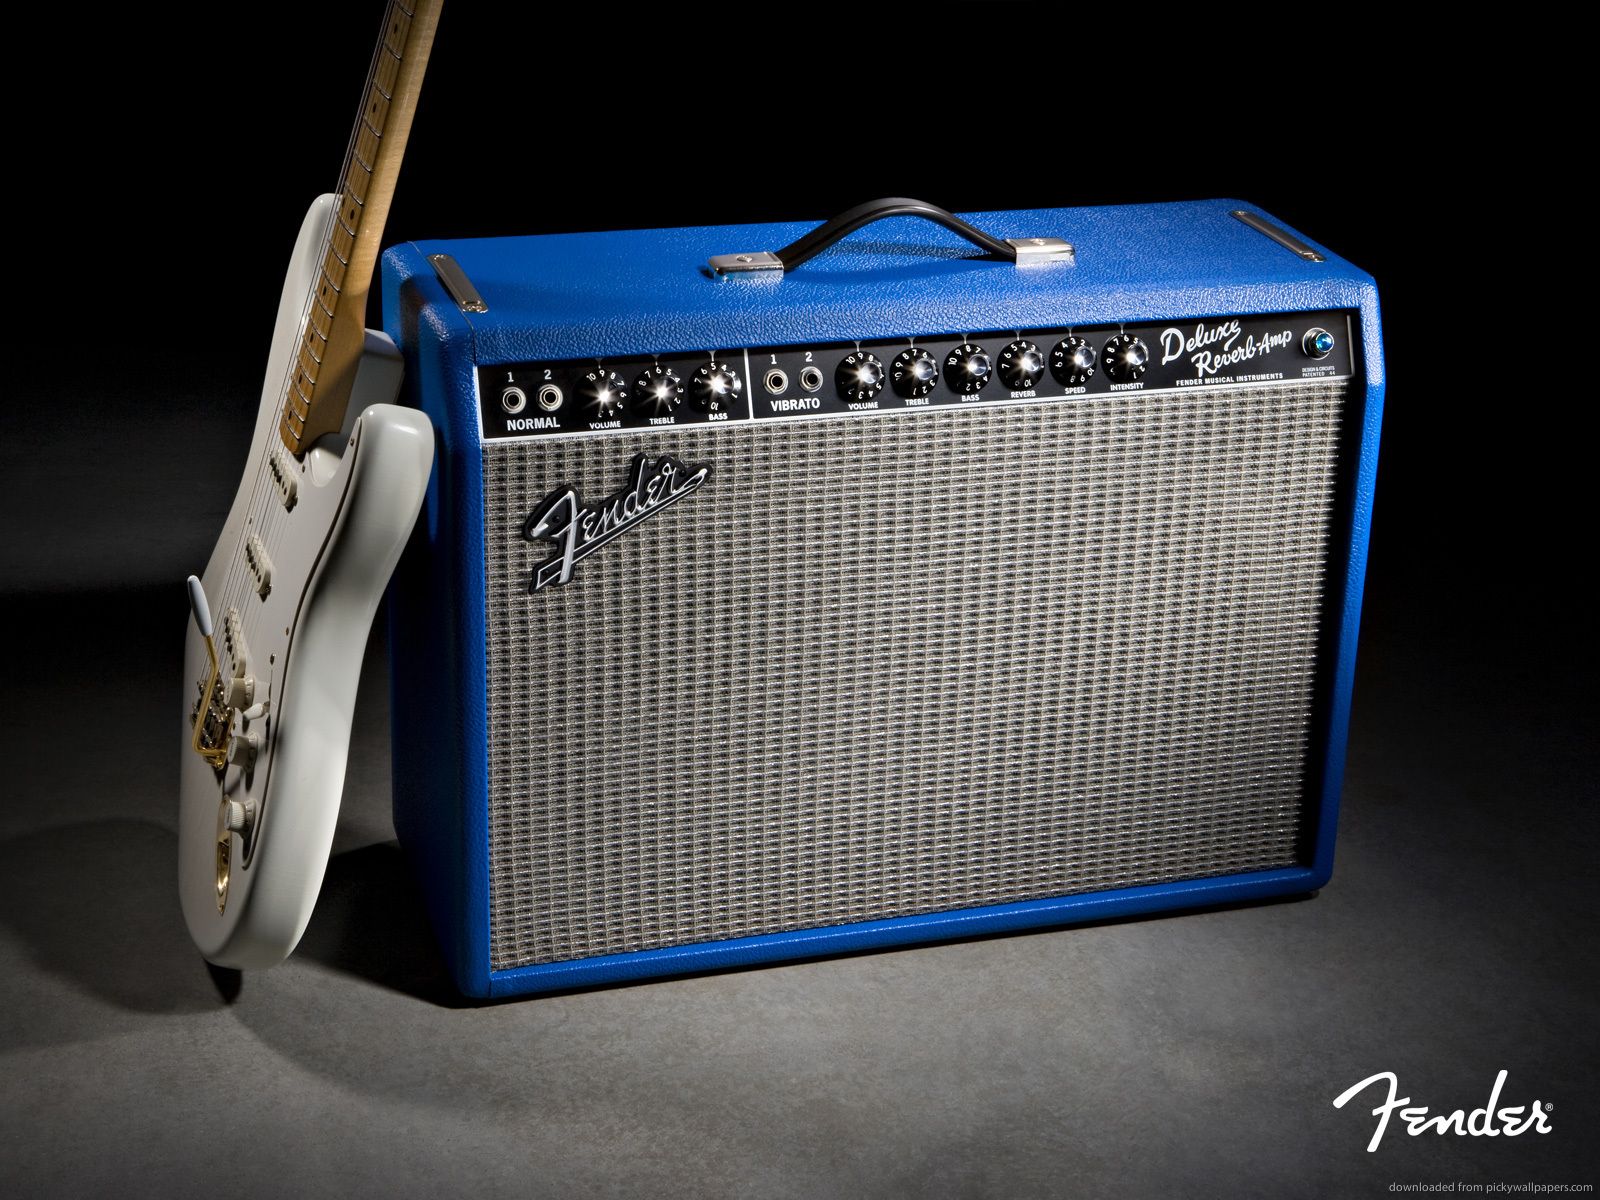 Silver Fender Guitar and Blue Amplifier Wallpaper HD Fender Guitar 1600x1200